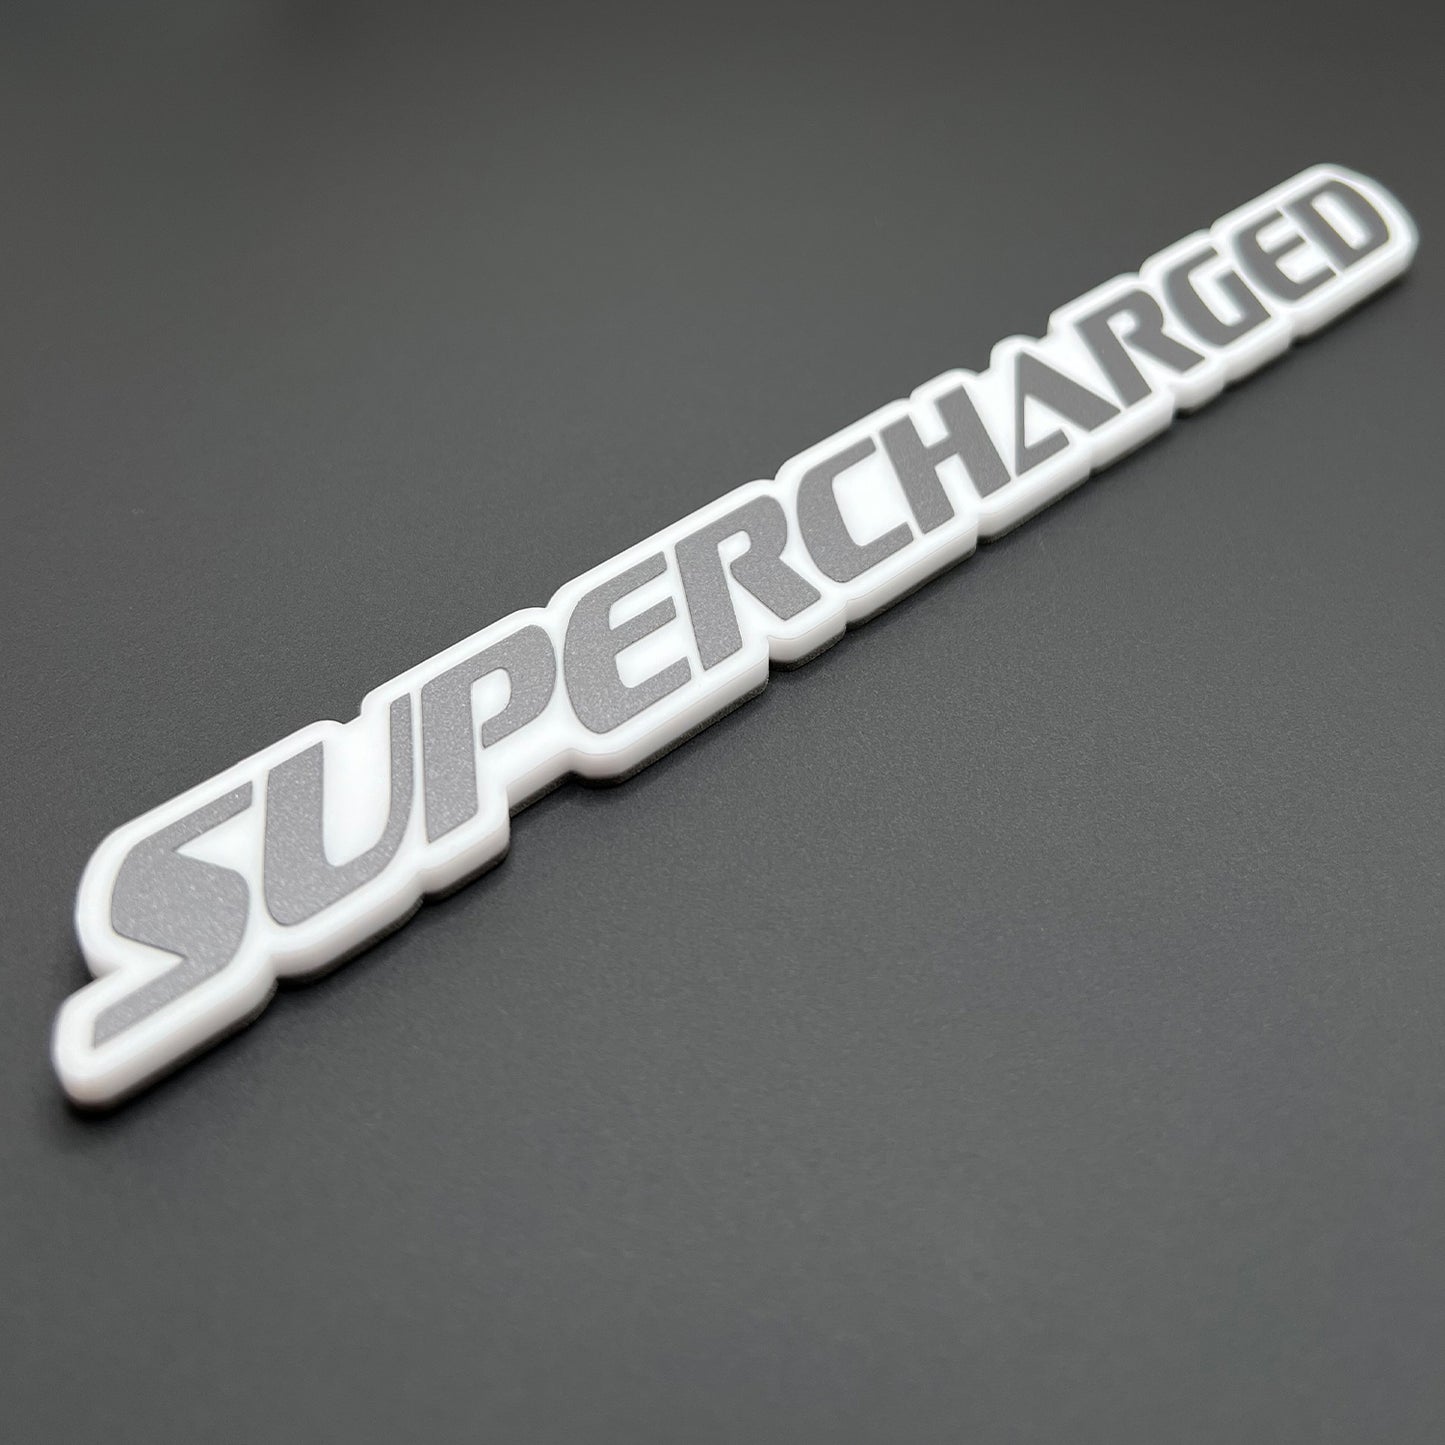 One SUPERCHARGED Emblem fits Dodge Durango Charger Challenger Trackhawk Badge